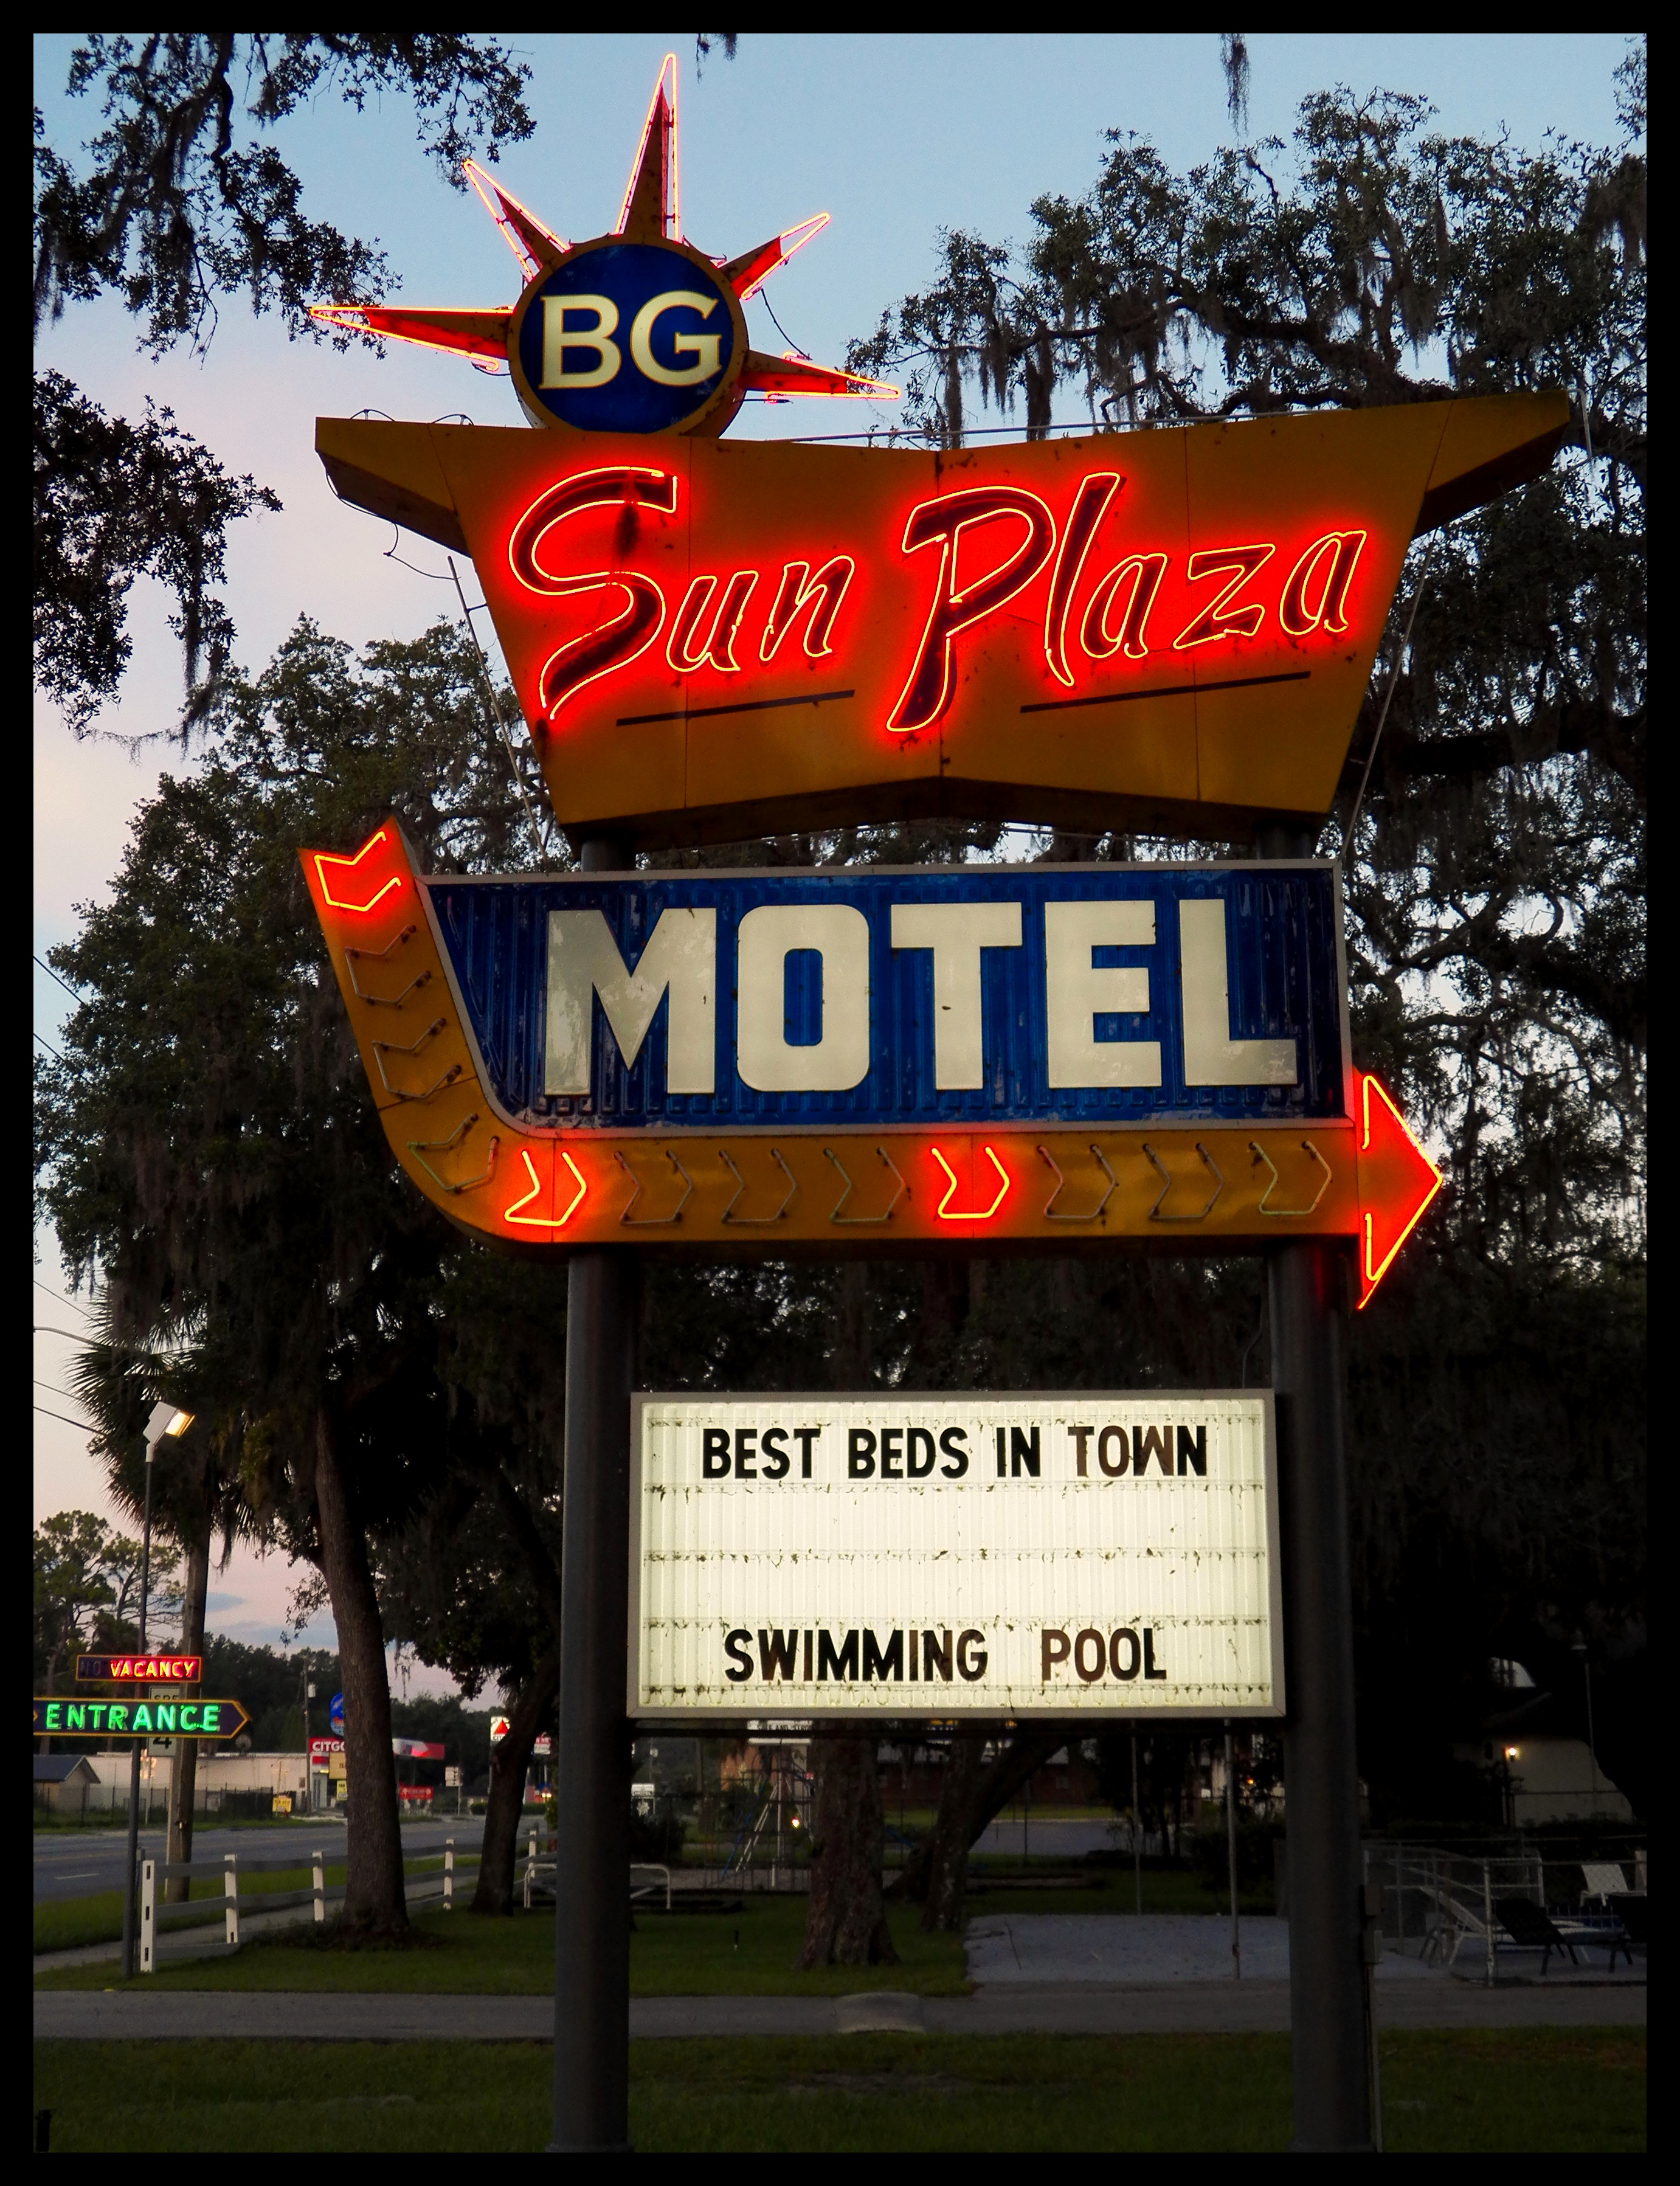 BG Sun Plaza Motel - 5461 East Silver Springs Boulevard, Silver Springs, Florida U.S.A. - July 8, 2017